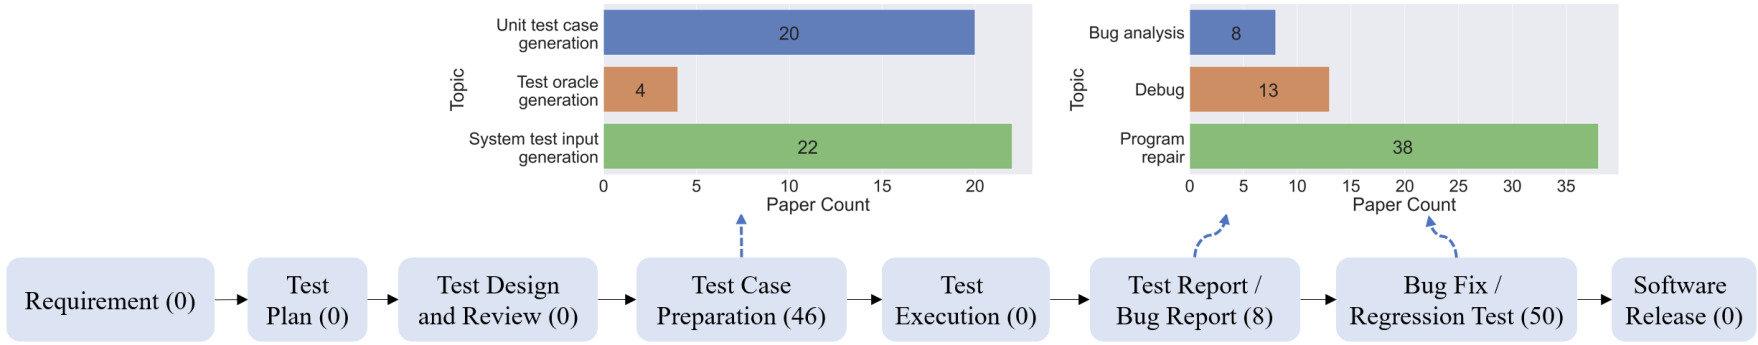 Figure 2. Distribution of testing tasks with LLMs